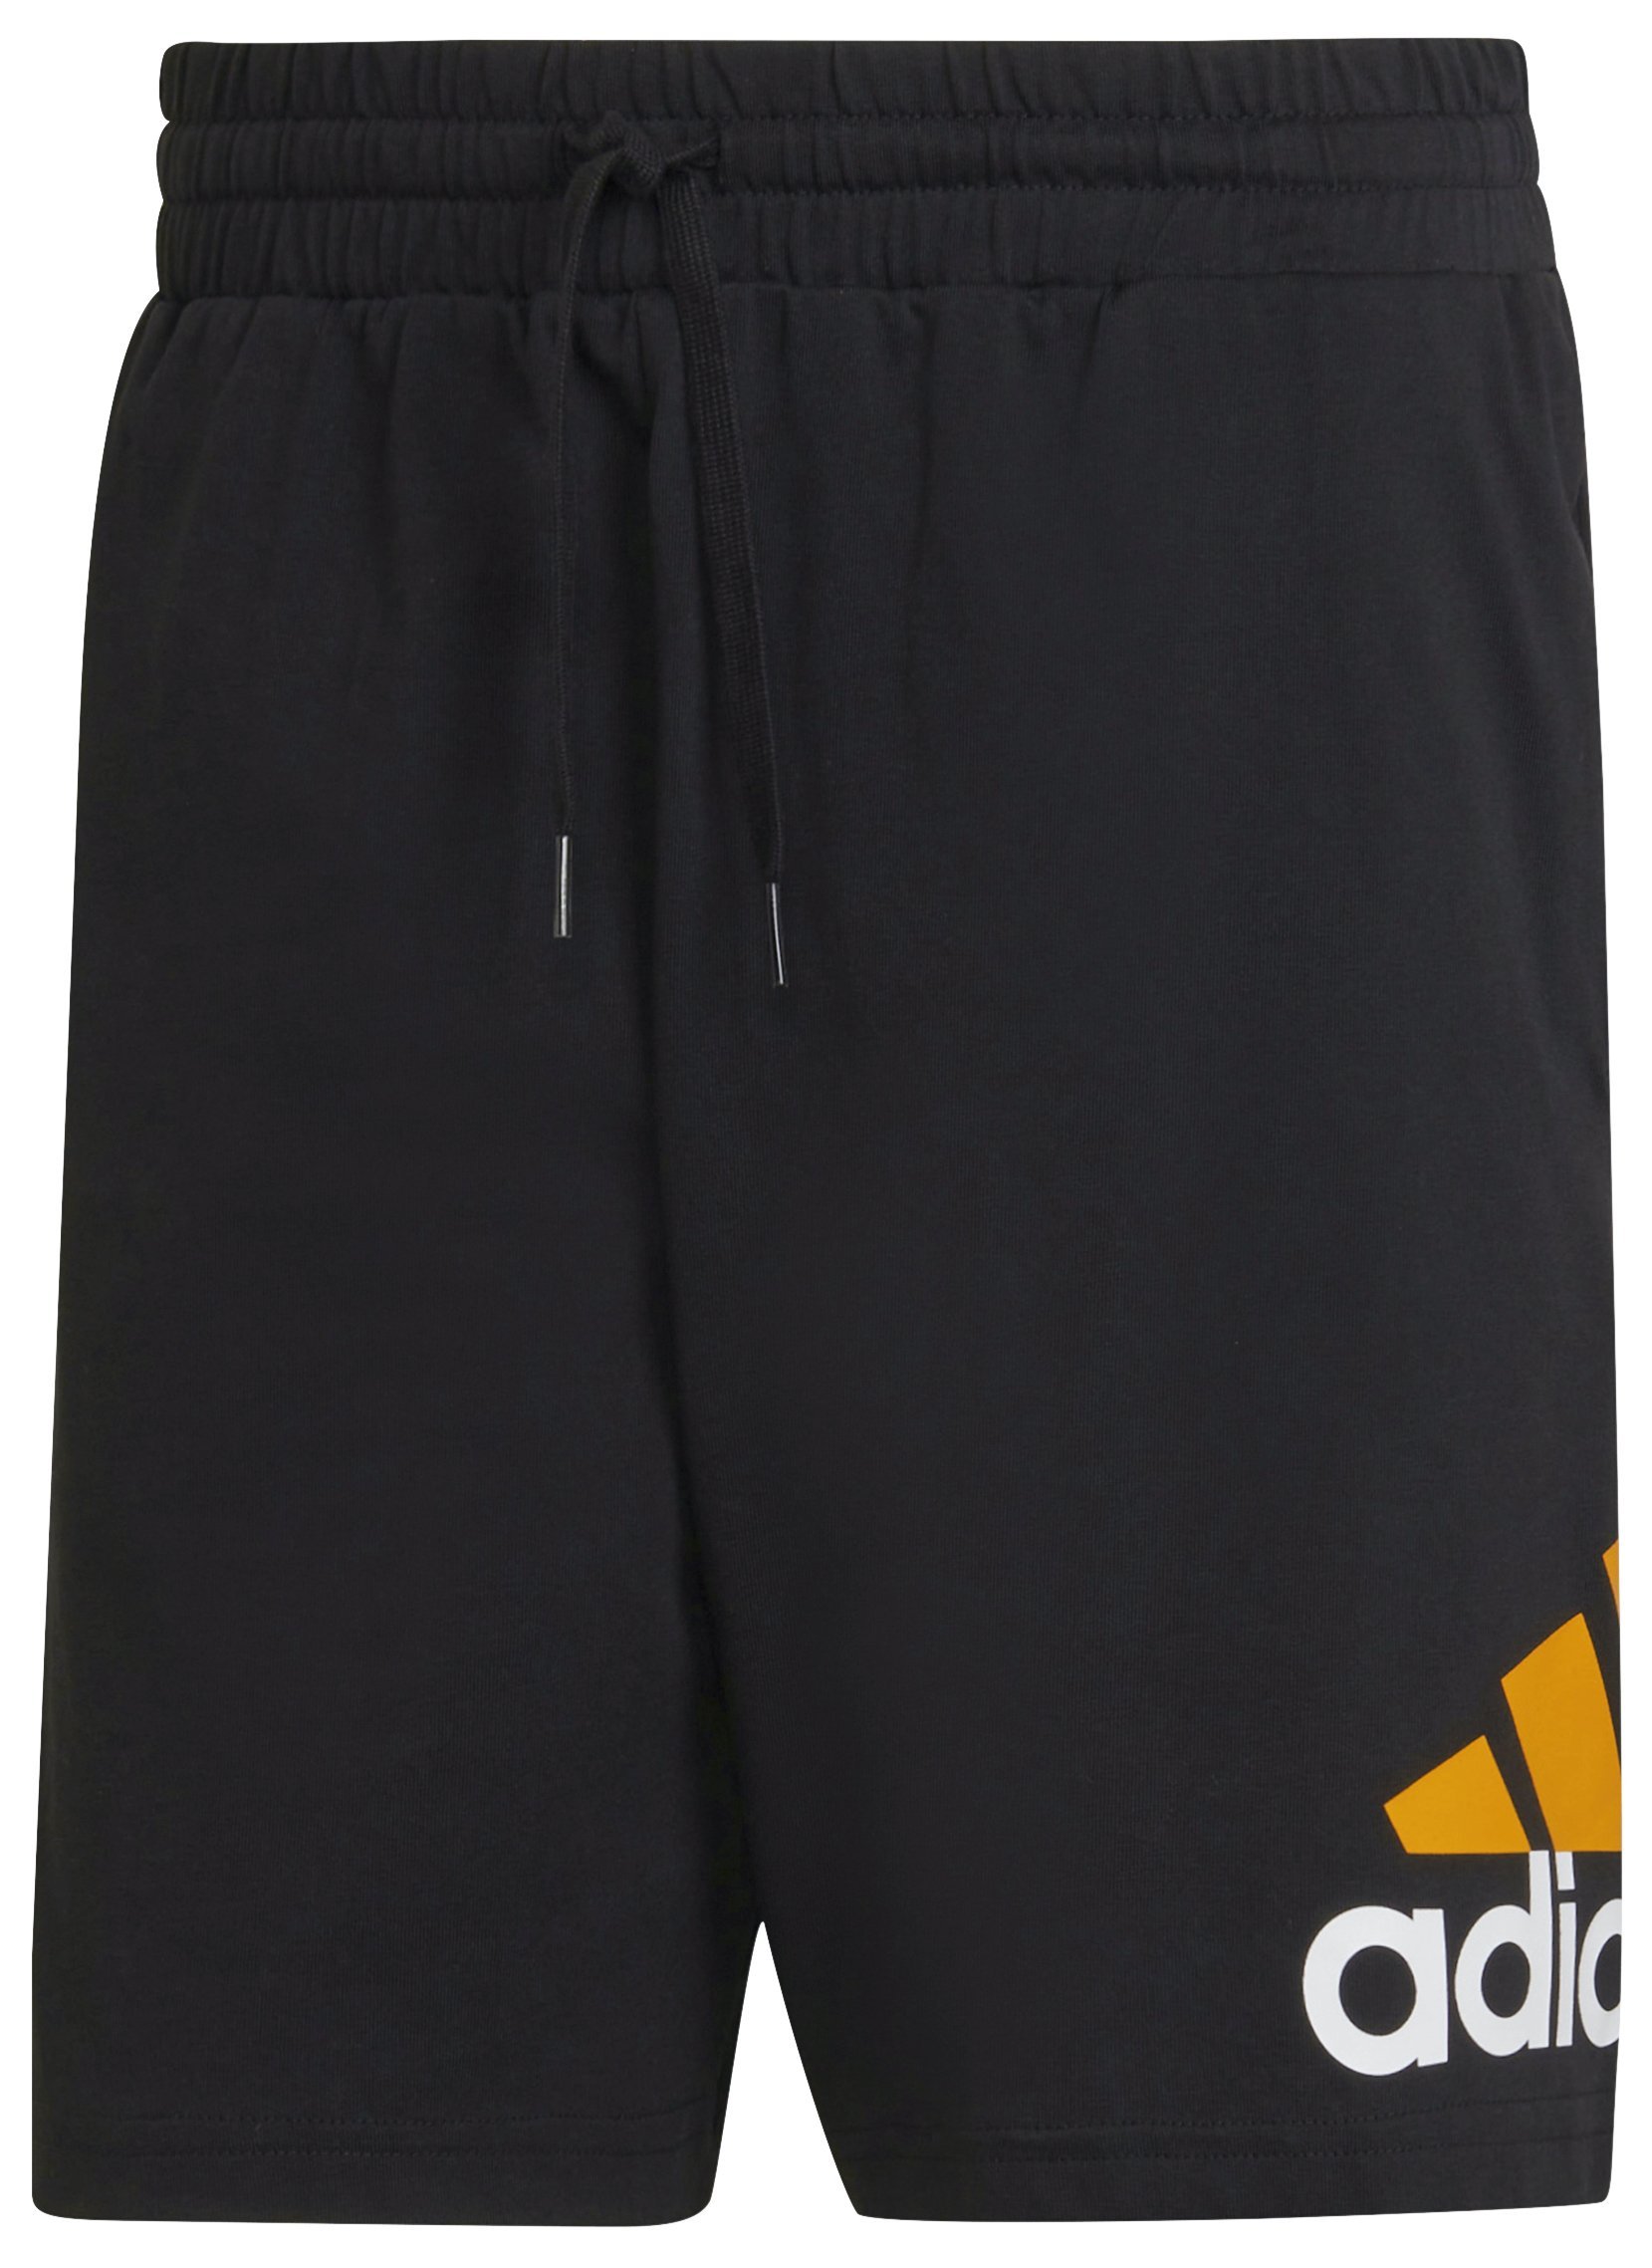 Adidas BL SJ Shorts